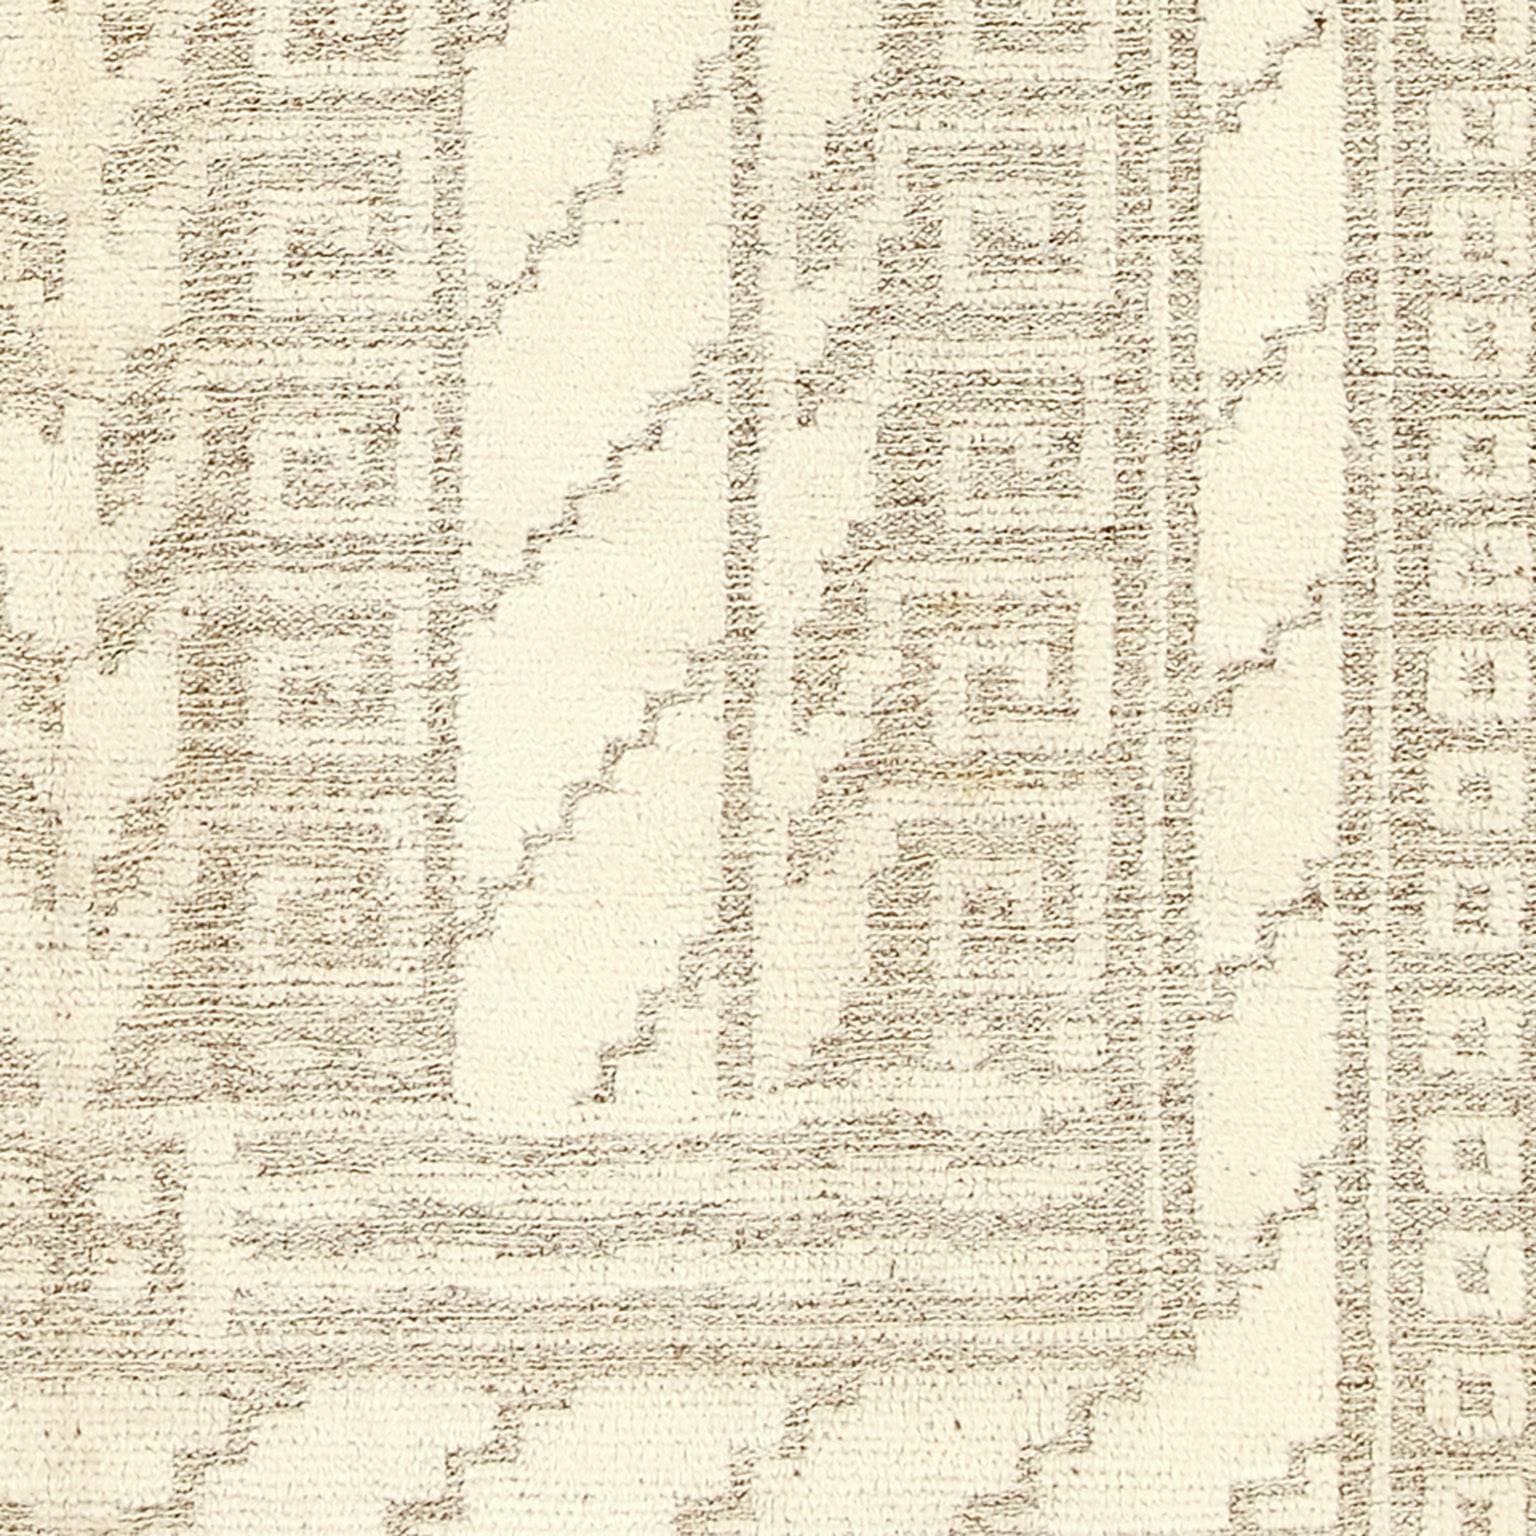 Hand-Woven Mid-20th Century Swedish Pile Carpet by Märta Måås-Fjetterström For Sale